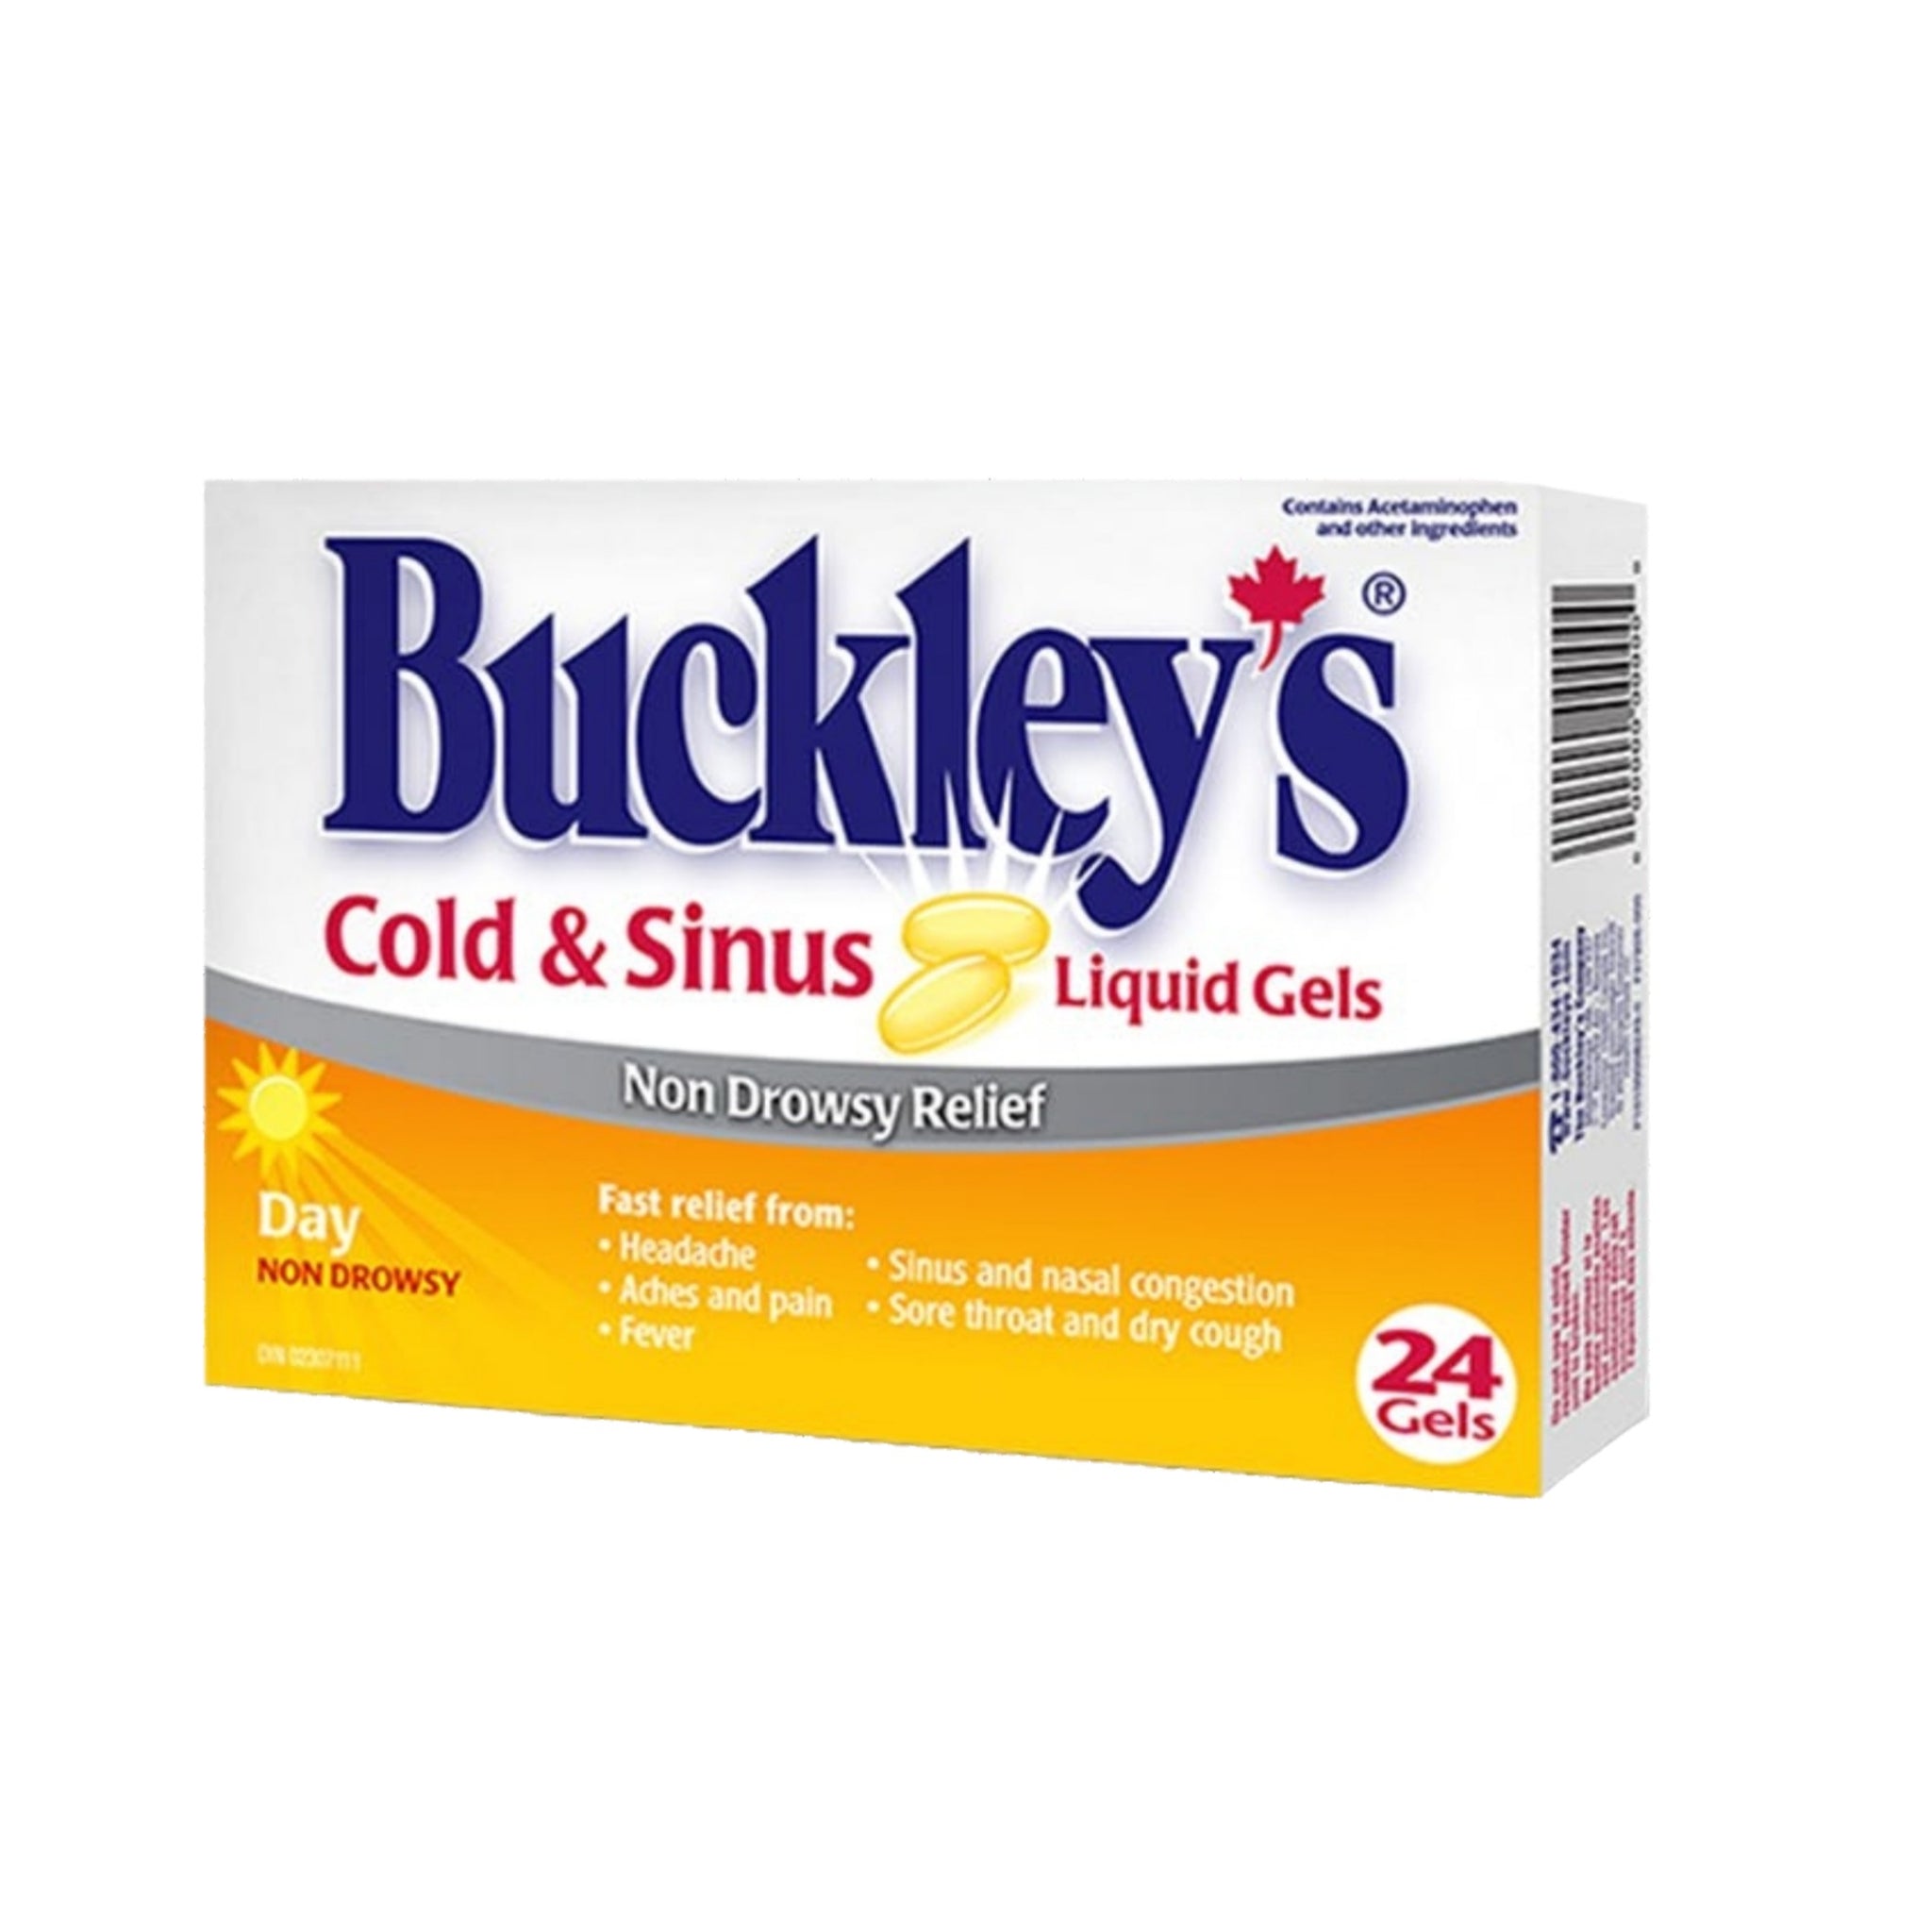 Buckley's Cold & Sinus Liquid Gels Day 24 Gels